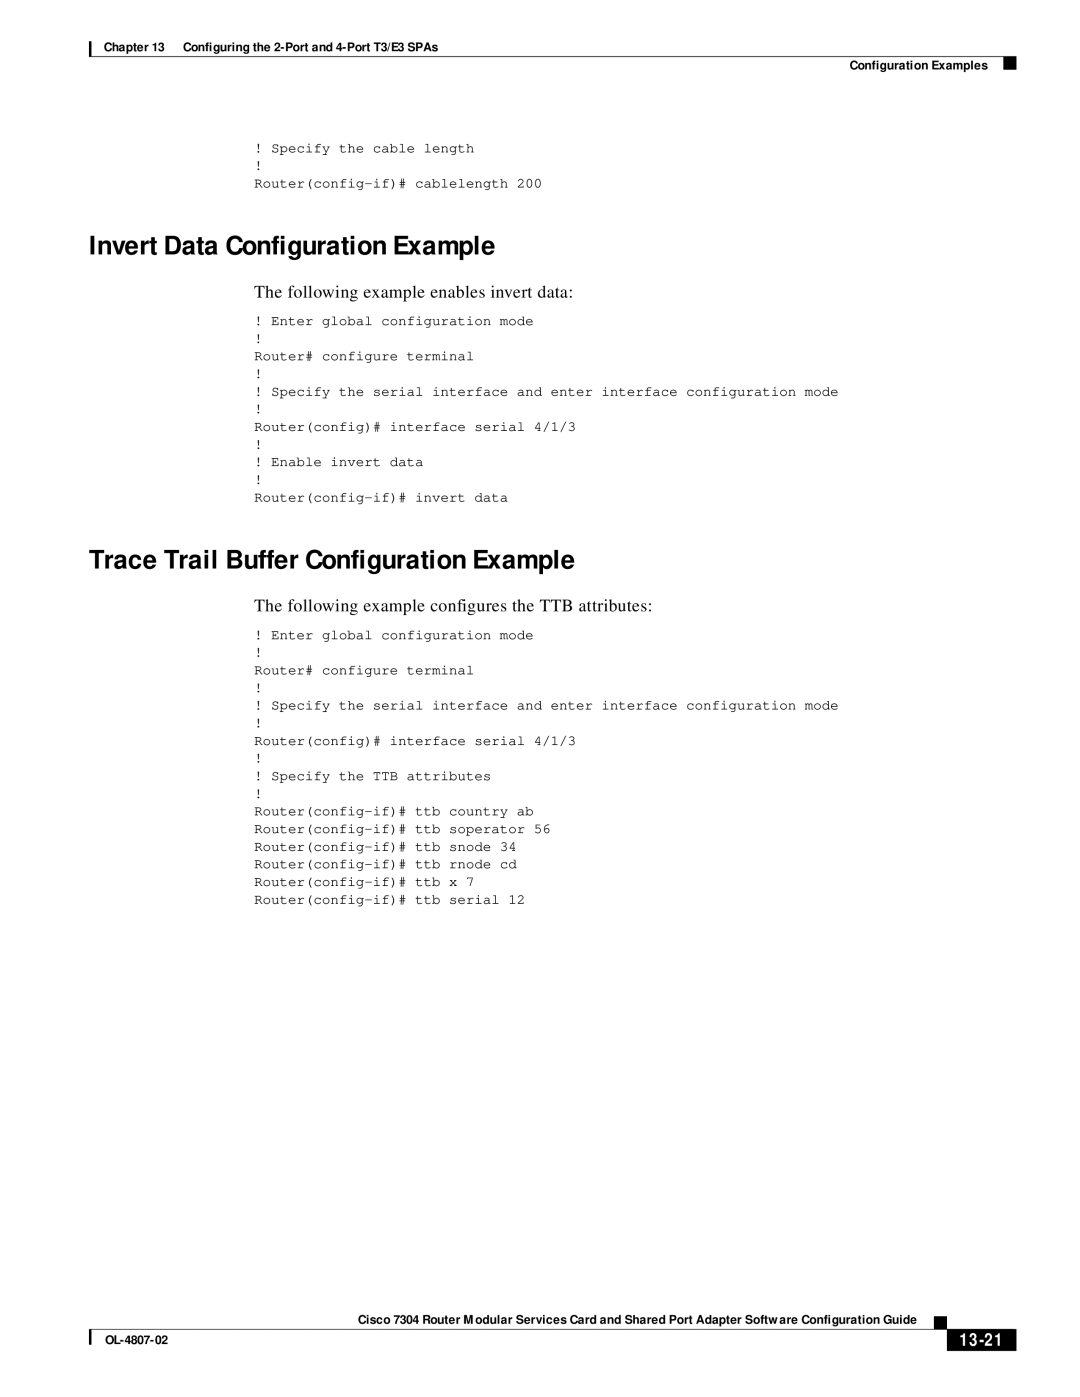 Cisco Systems 7304 manual Invert Data Configuration Example, Trace Trail Buffer Configuration Example, 13-21, OL-4807-02 